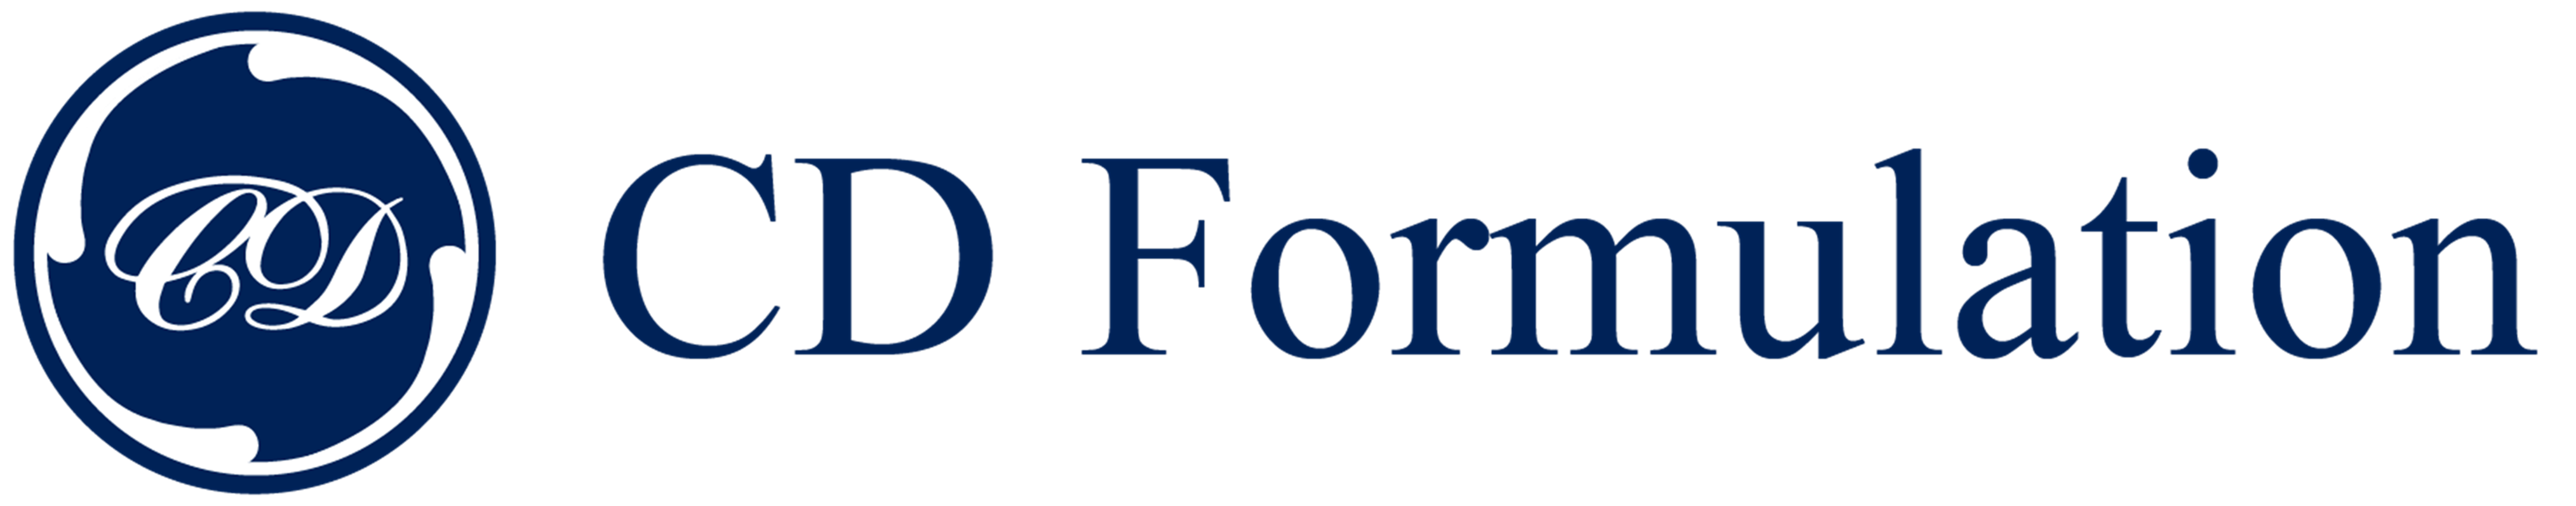 CD Formulation logo